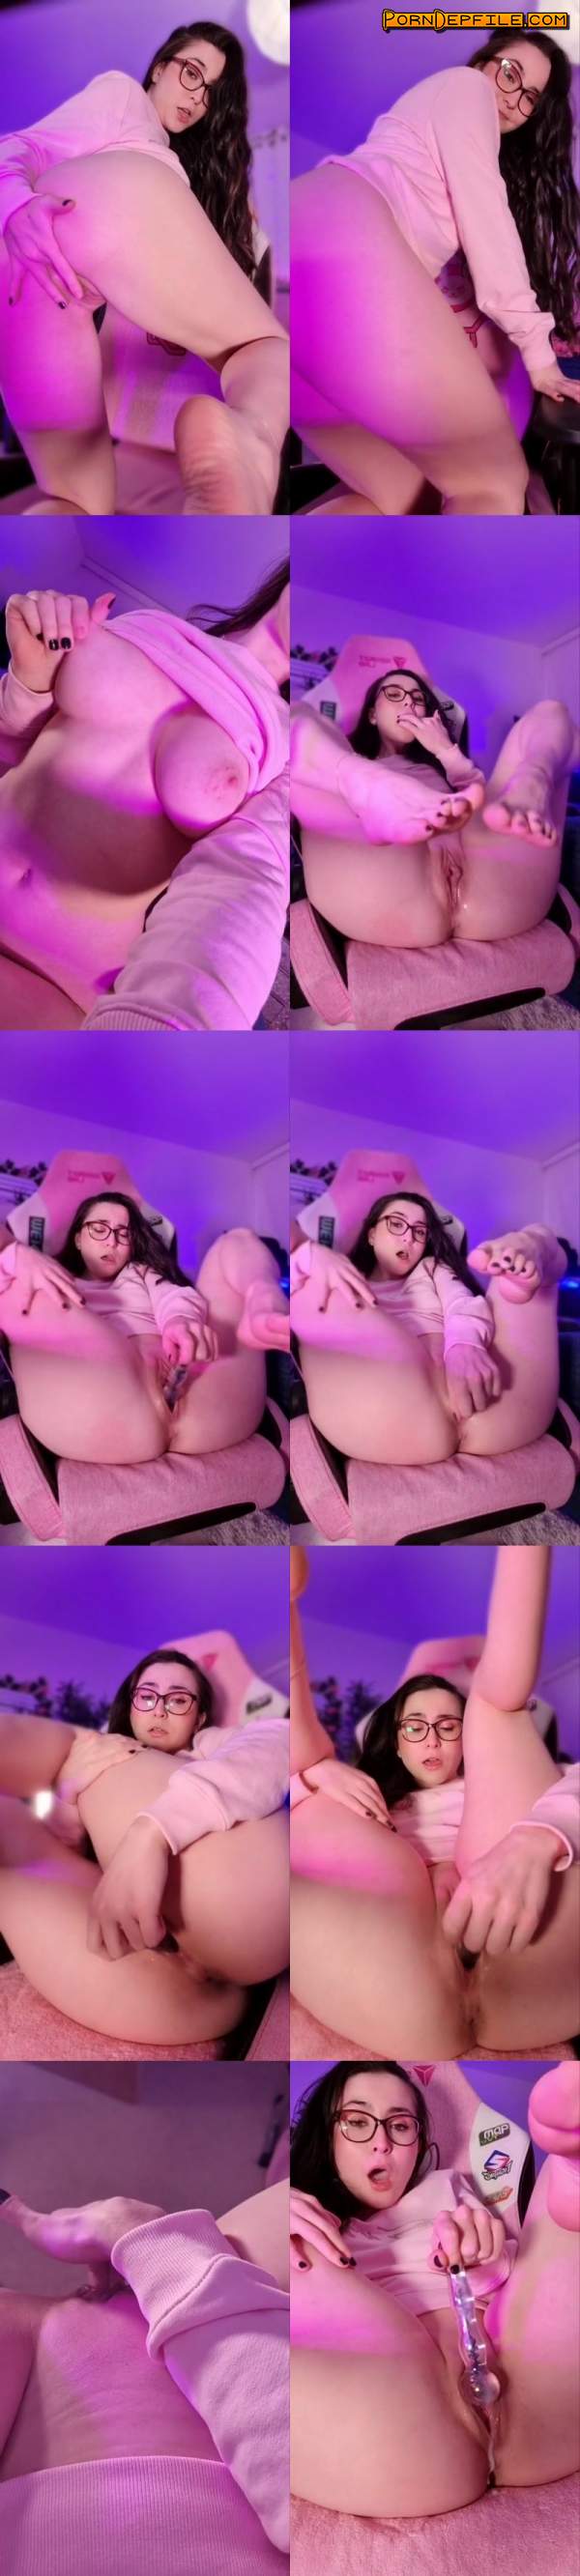 Pornhub, EmilyHill33: Emily Hill - Cumming In My Gaming Chair (Orgasm, Masturbation, Brunette, Solo) 1080p